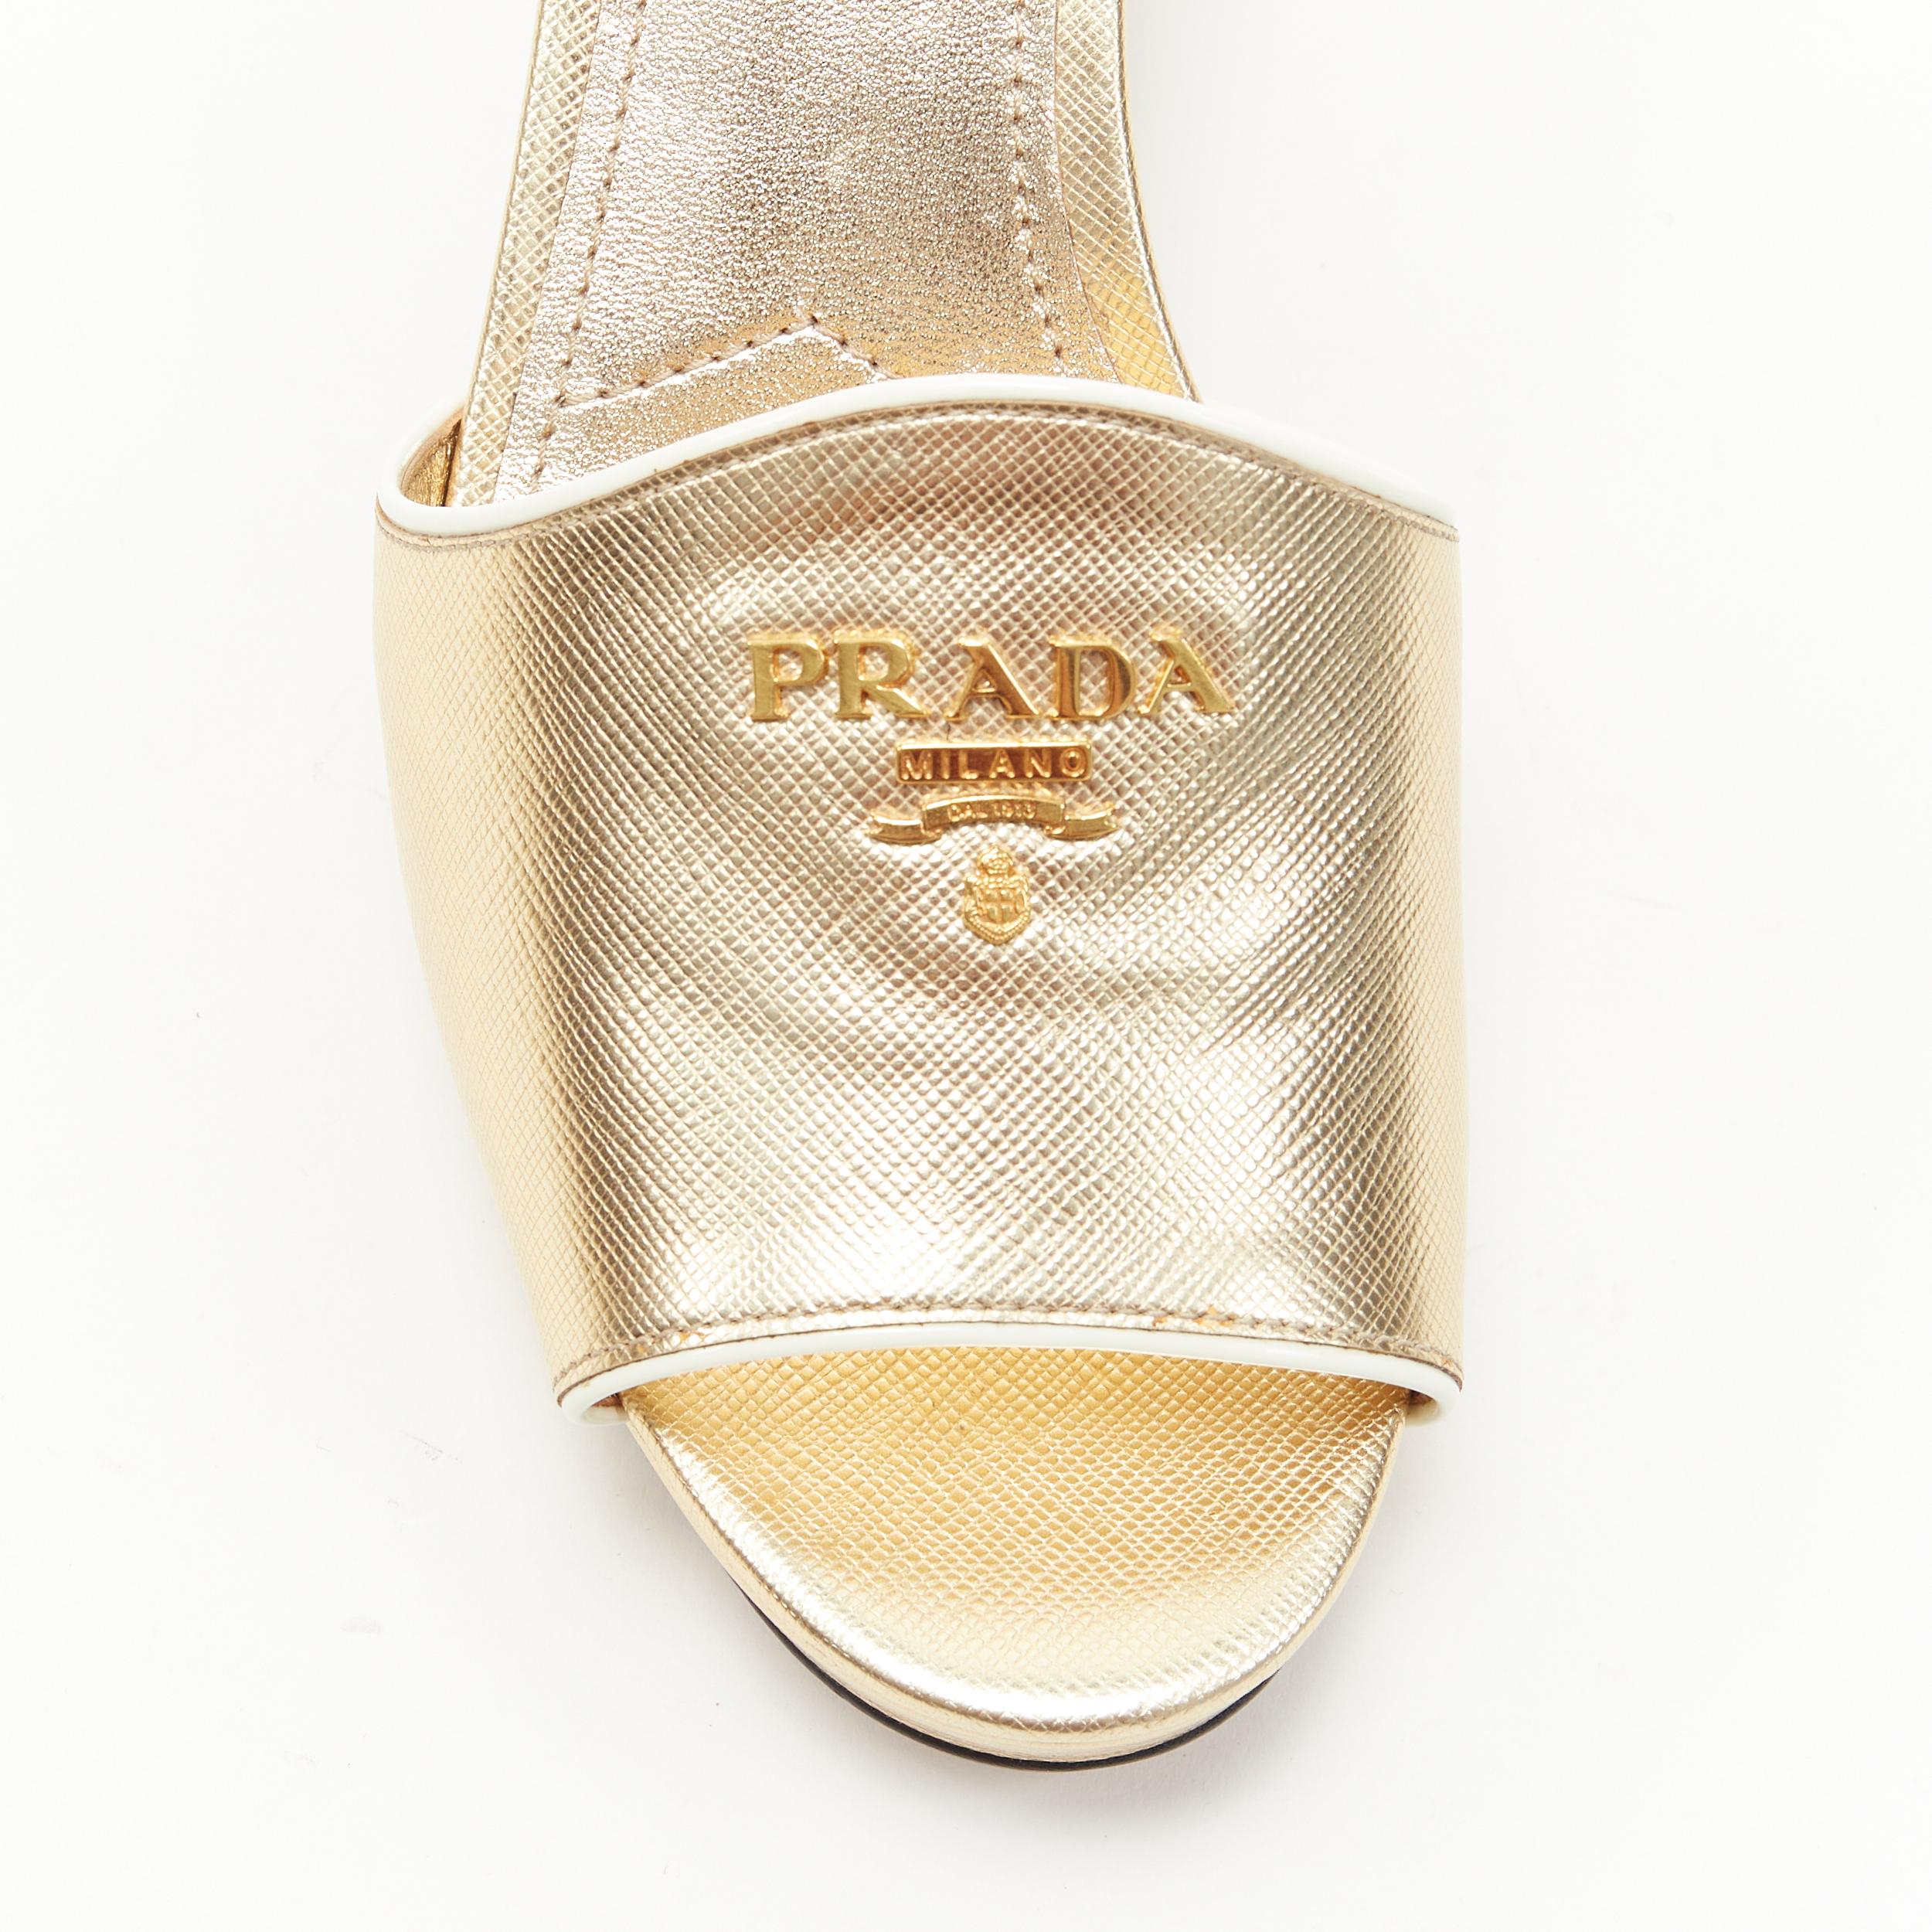 White new PRADA metallic gold saffiano leather logo open toe mule clog sandal EU38.5